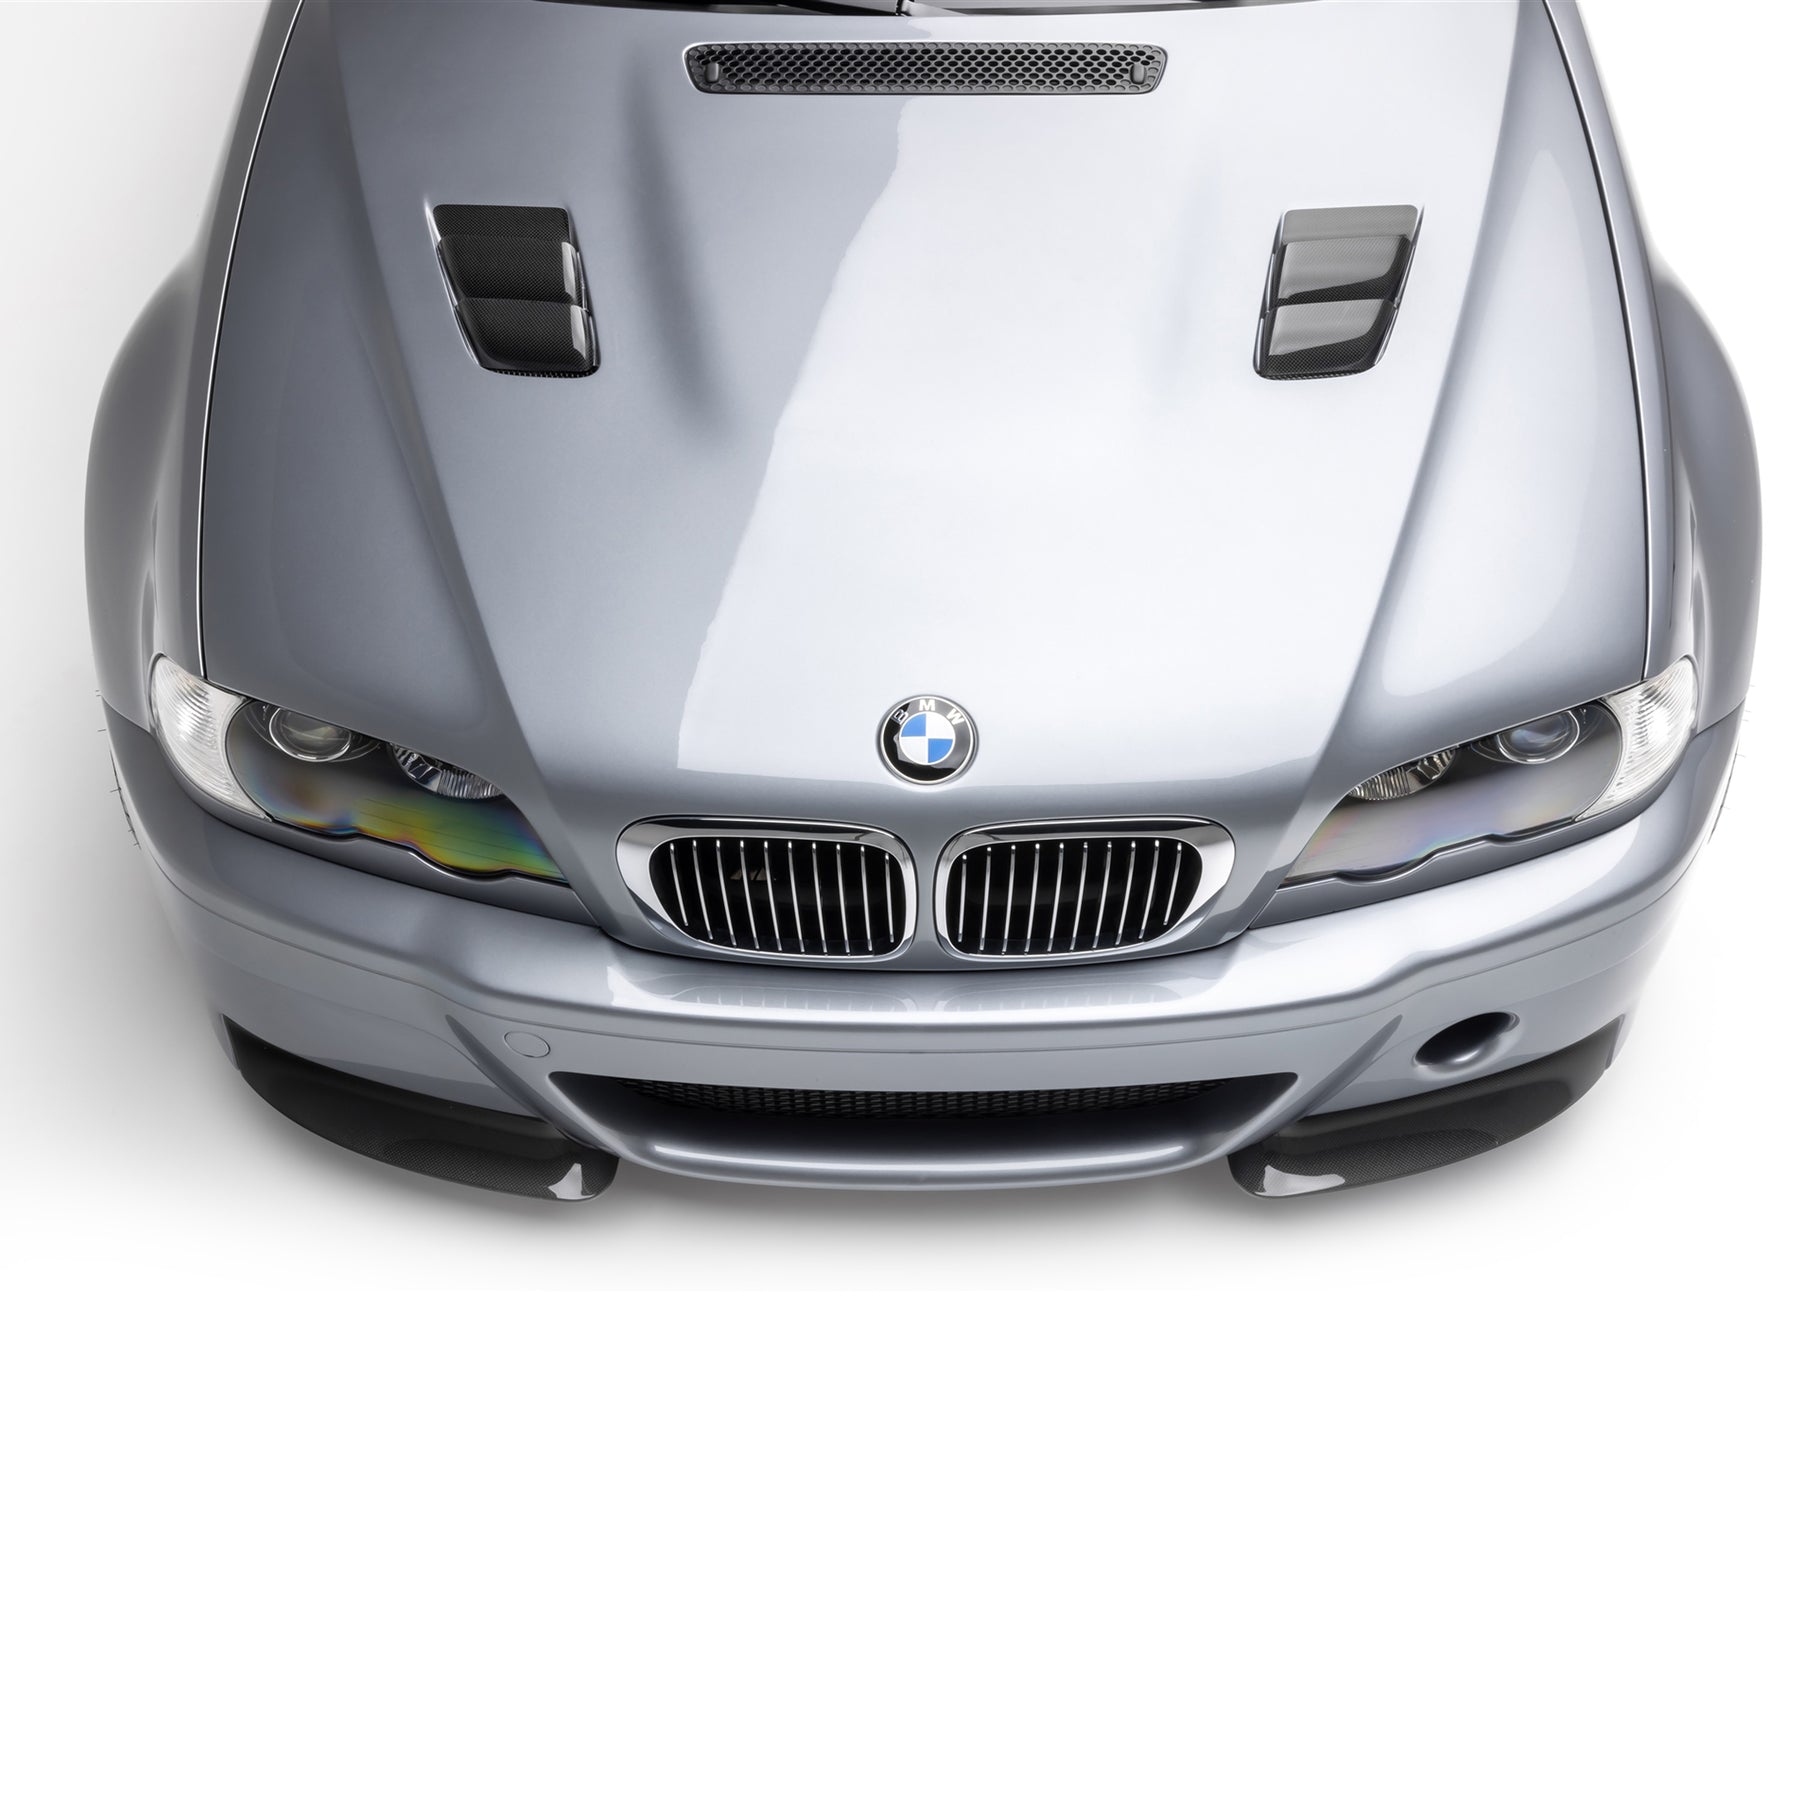  BMW E46 M3 GTR Tribute